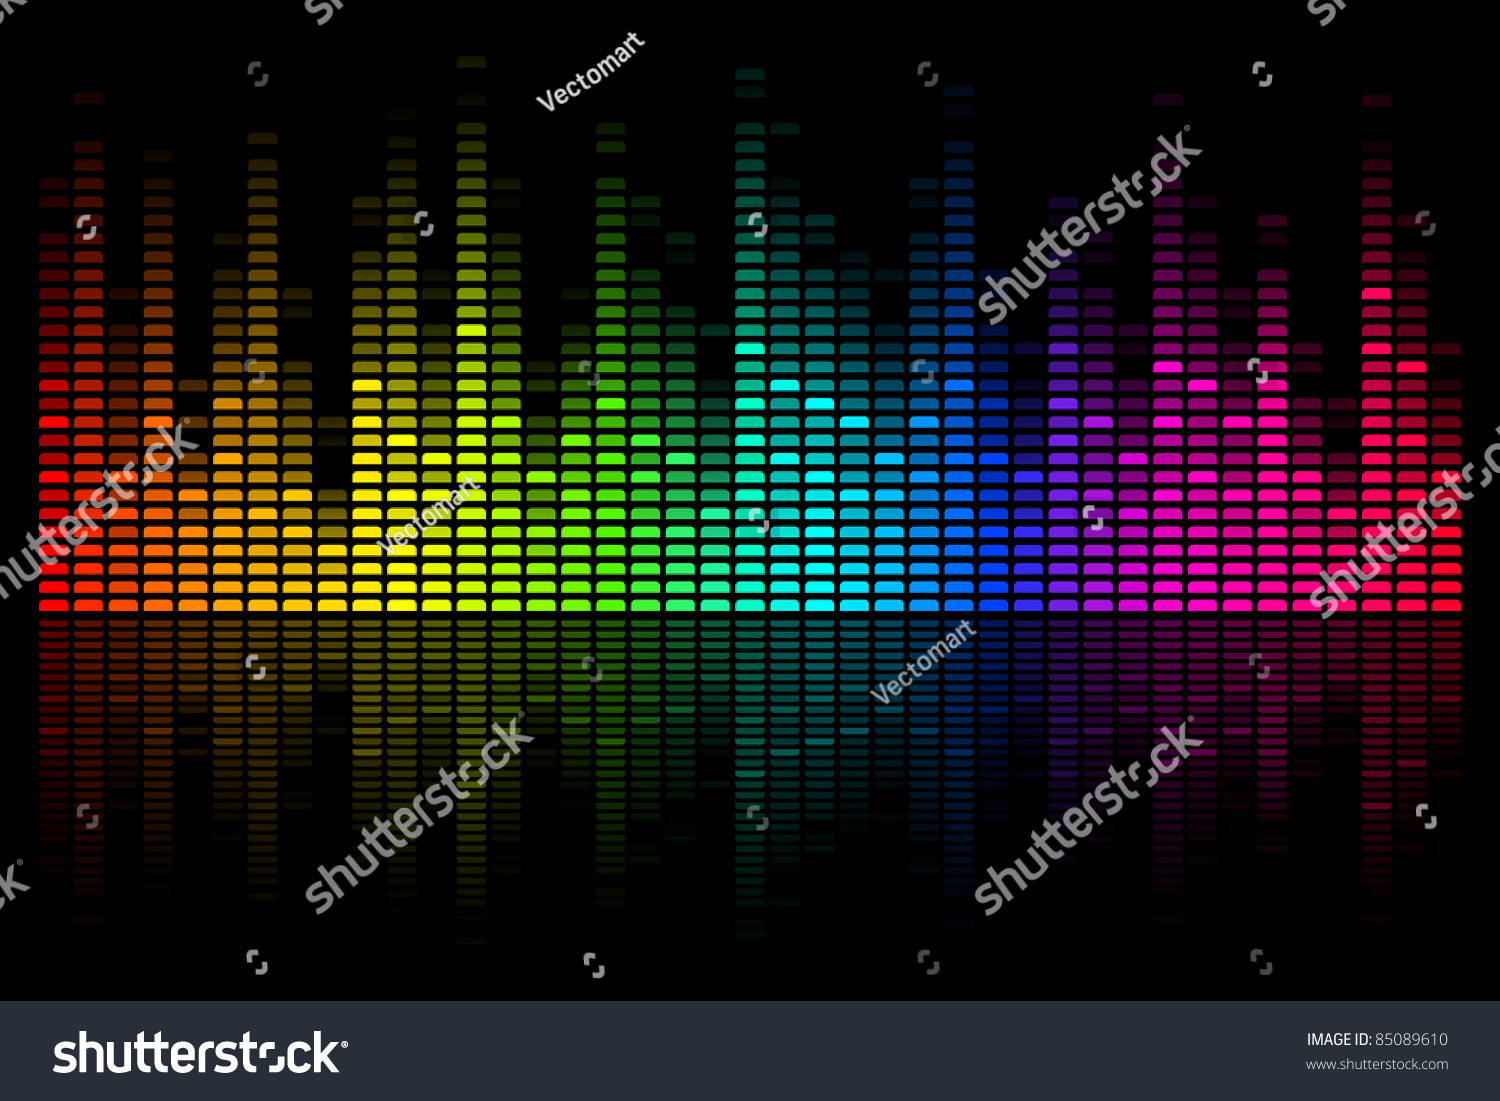 Illustration Of Colorful Musical Bar Showing Volume On Black Background ...